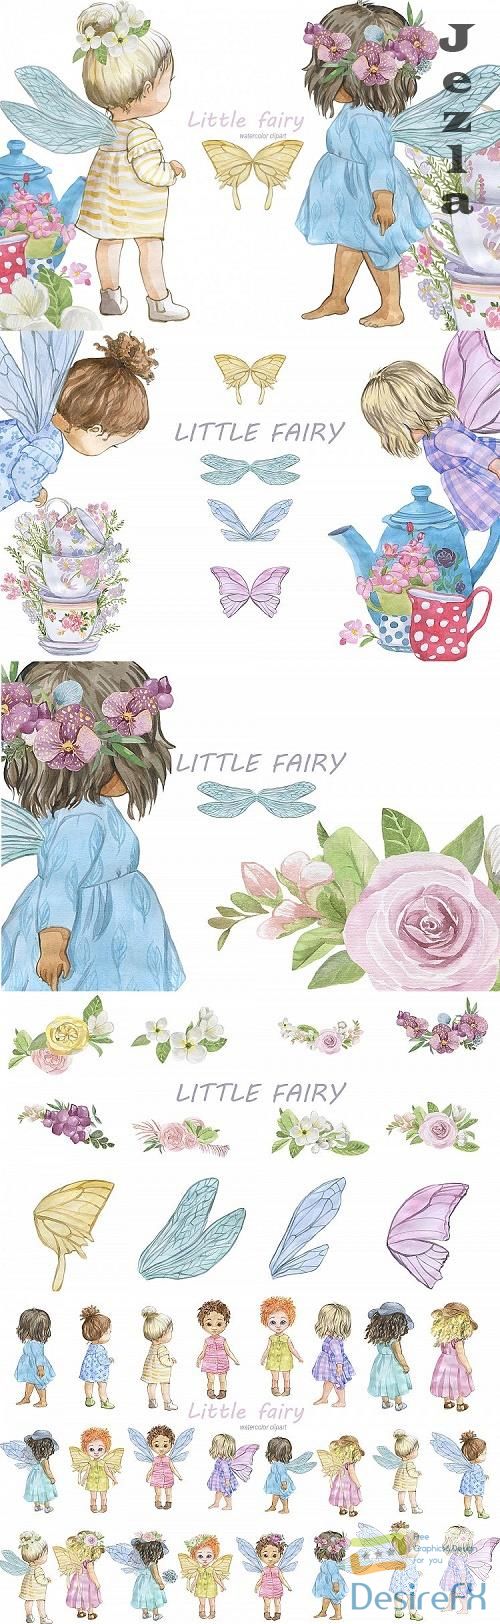 Little Fairies - 522937